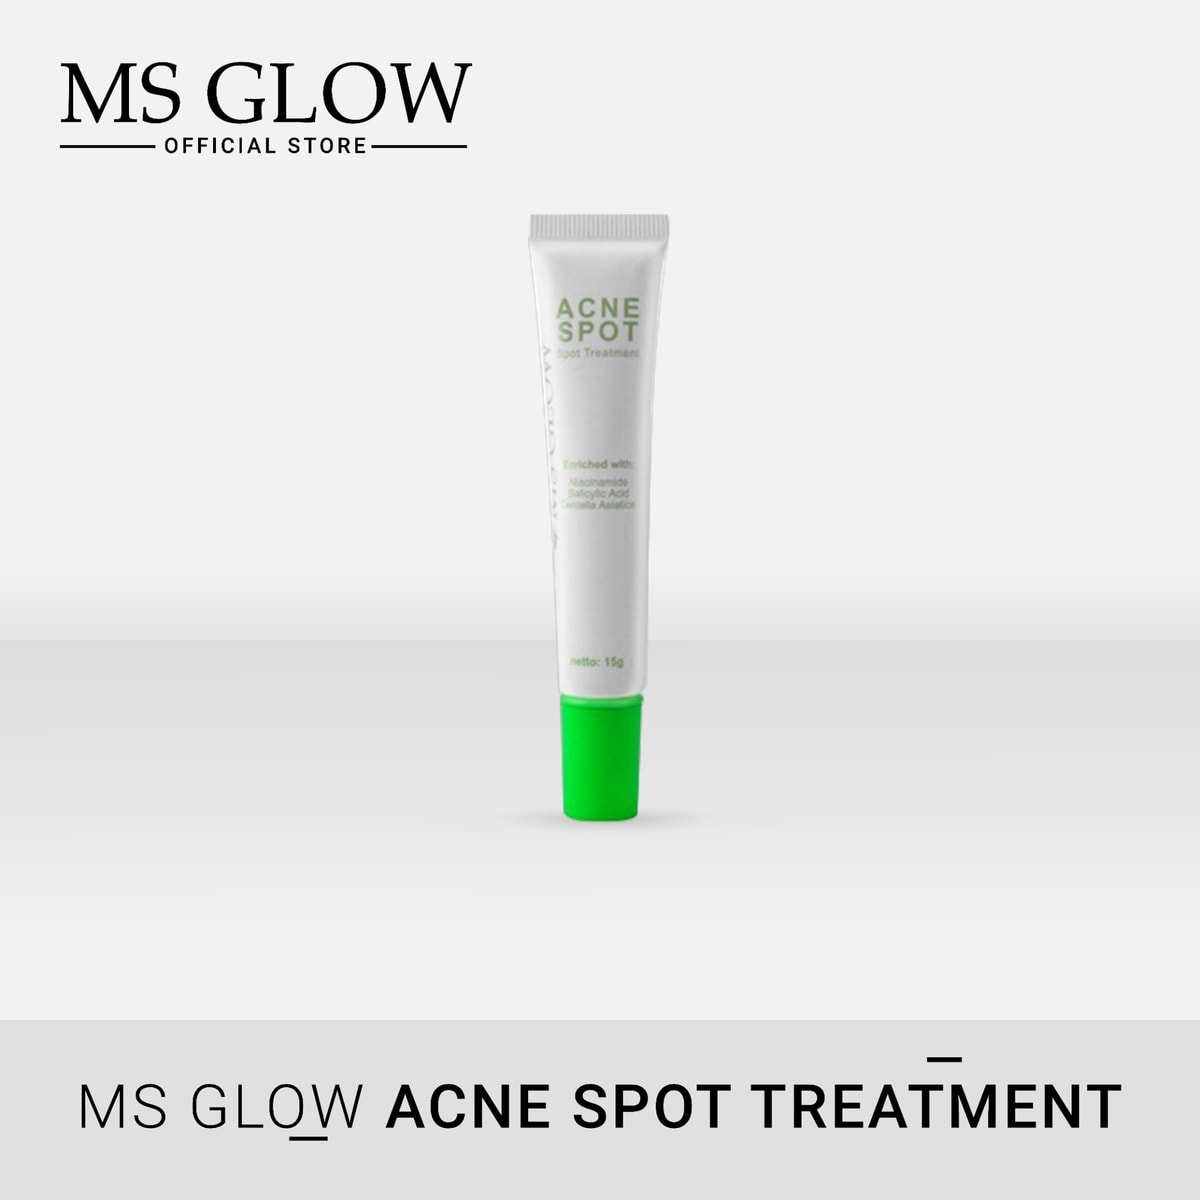 Jual Acne Spot Treatment Ms Glow 100 Original Ms Glow Store